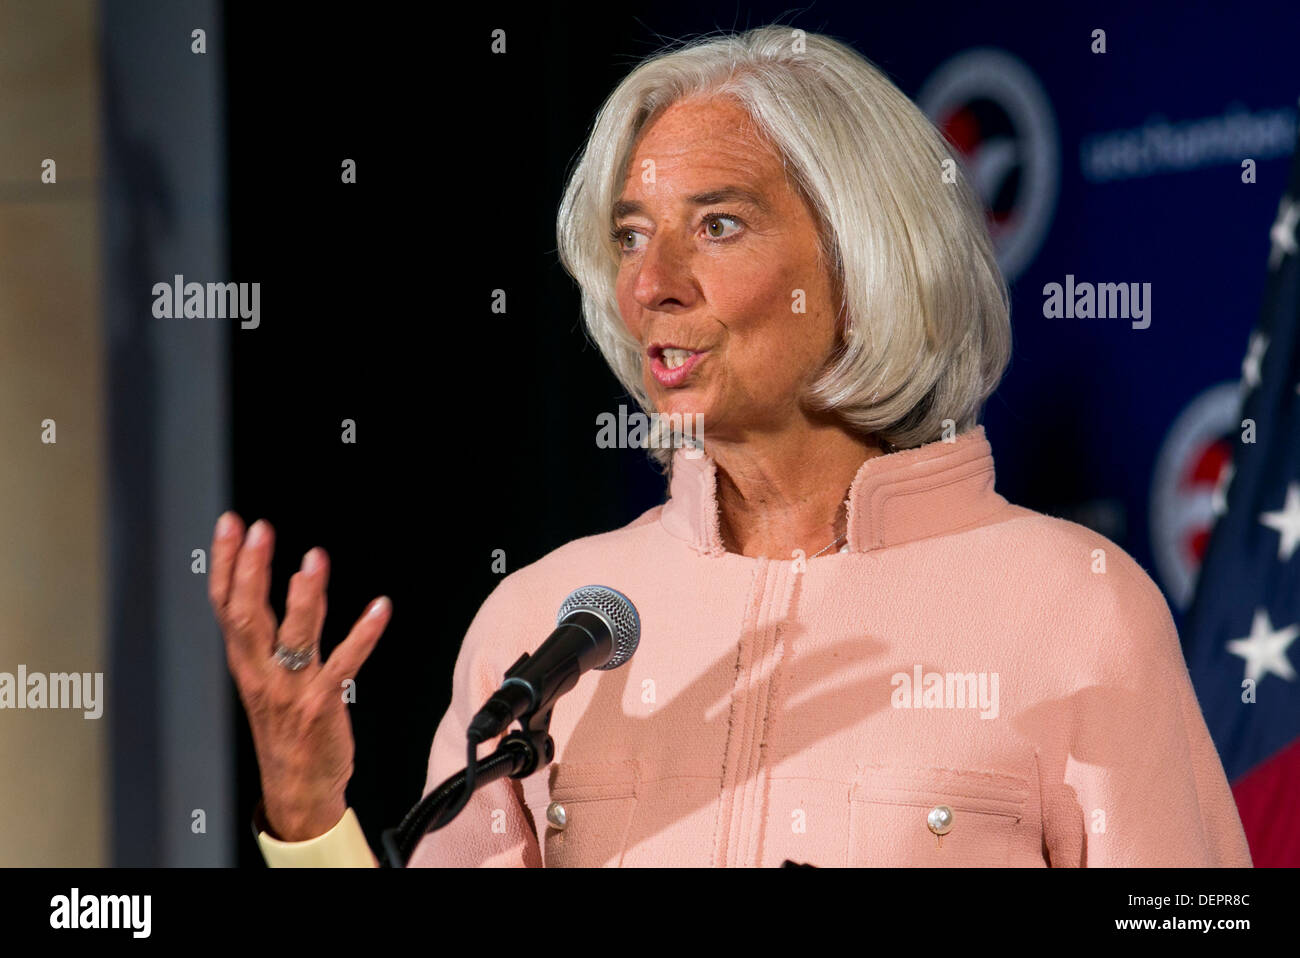 Christine Lagarde, Managing Director of the International Monetary Fund (IMF).  Stock Photo